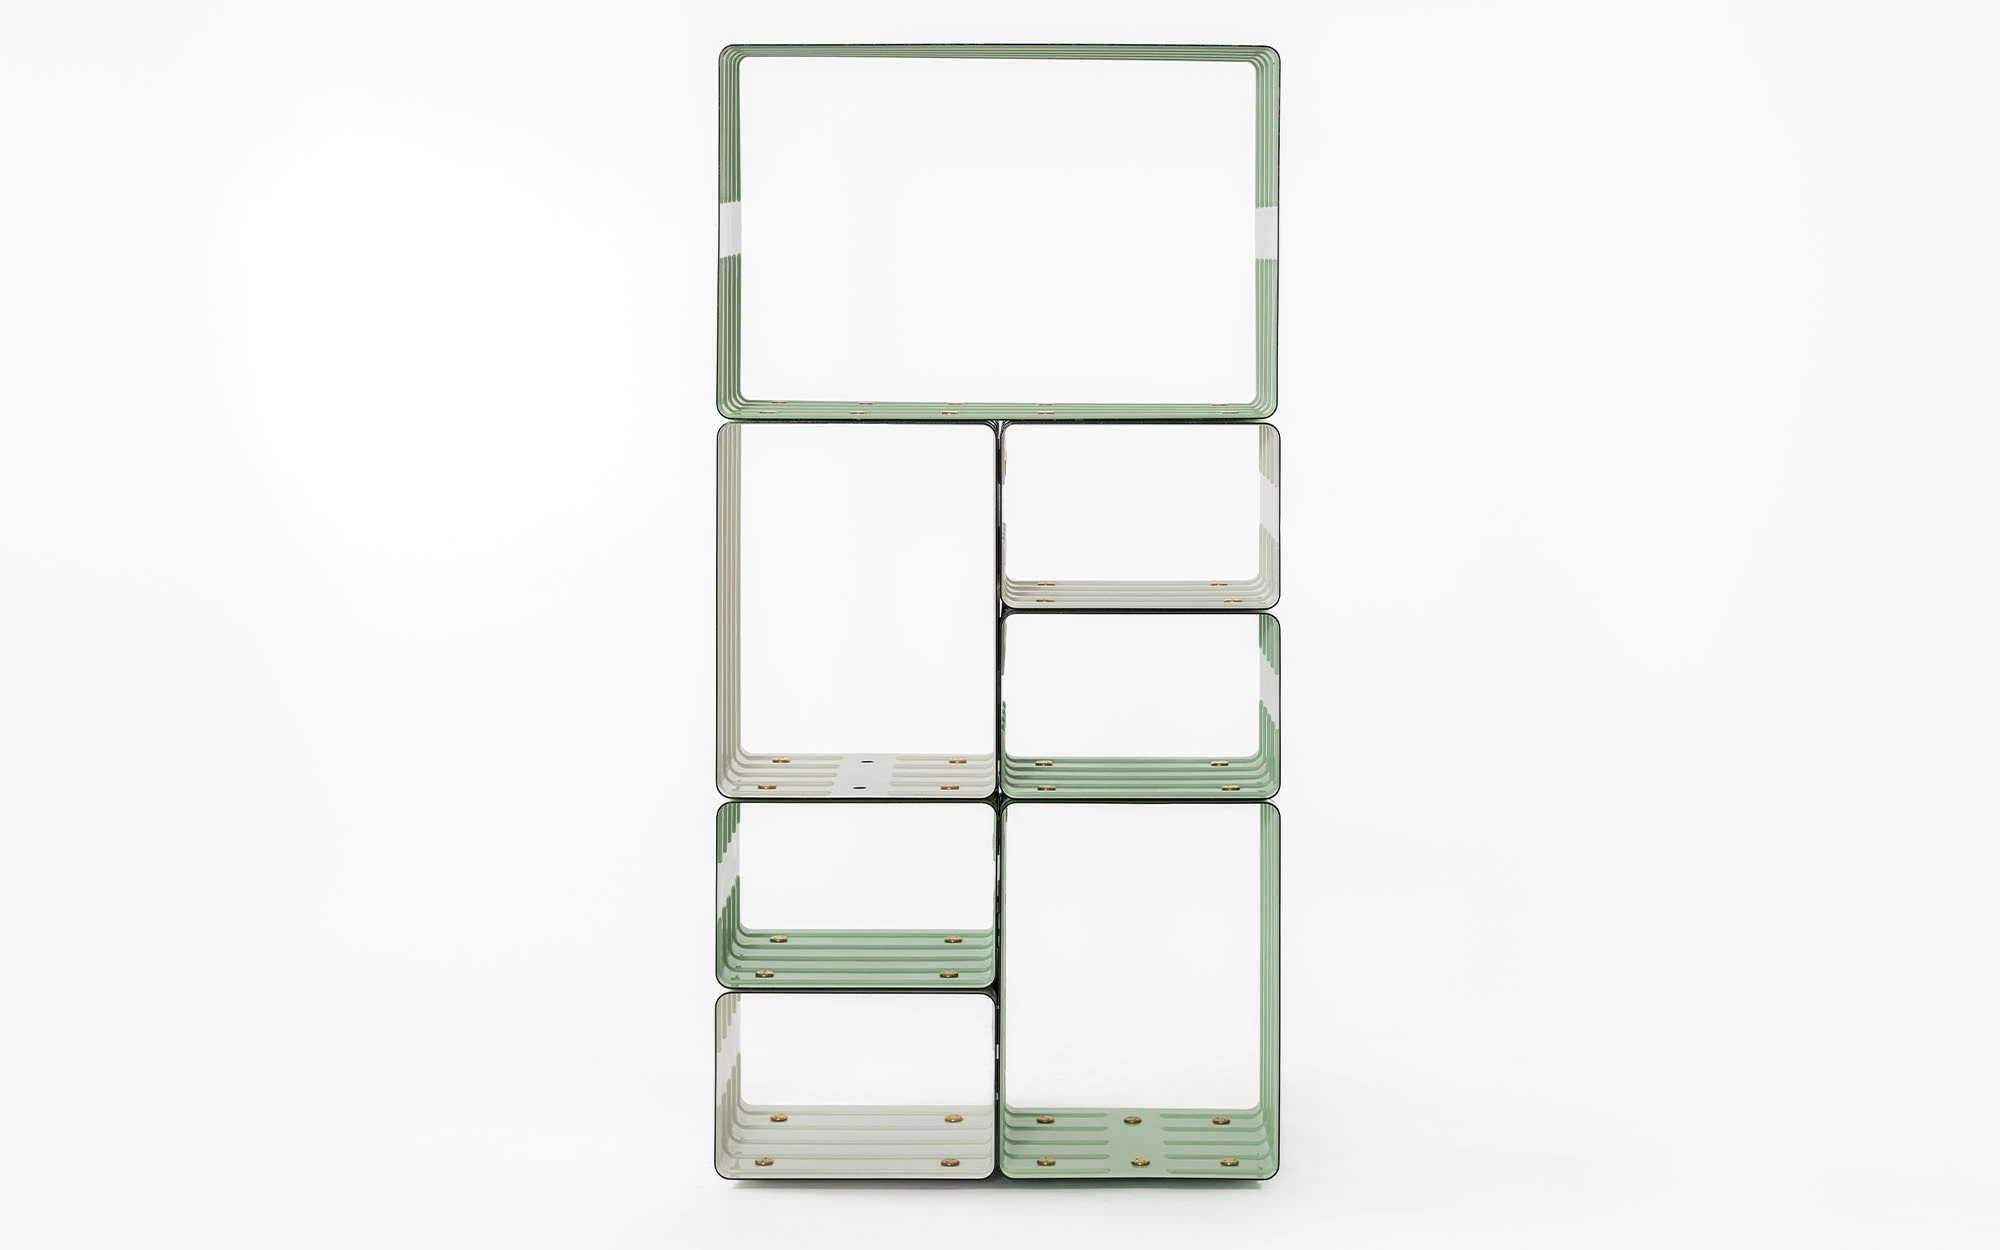 Quobus 1,2,4 two-colored - Marc Newson - Bookshelf - Galerie kreo